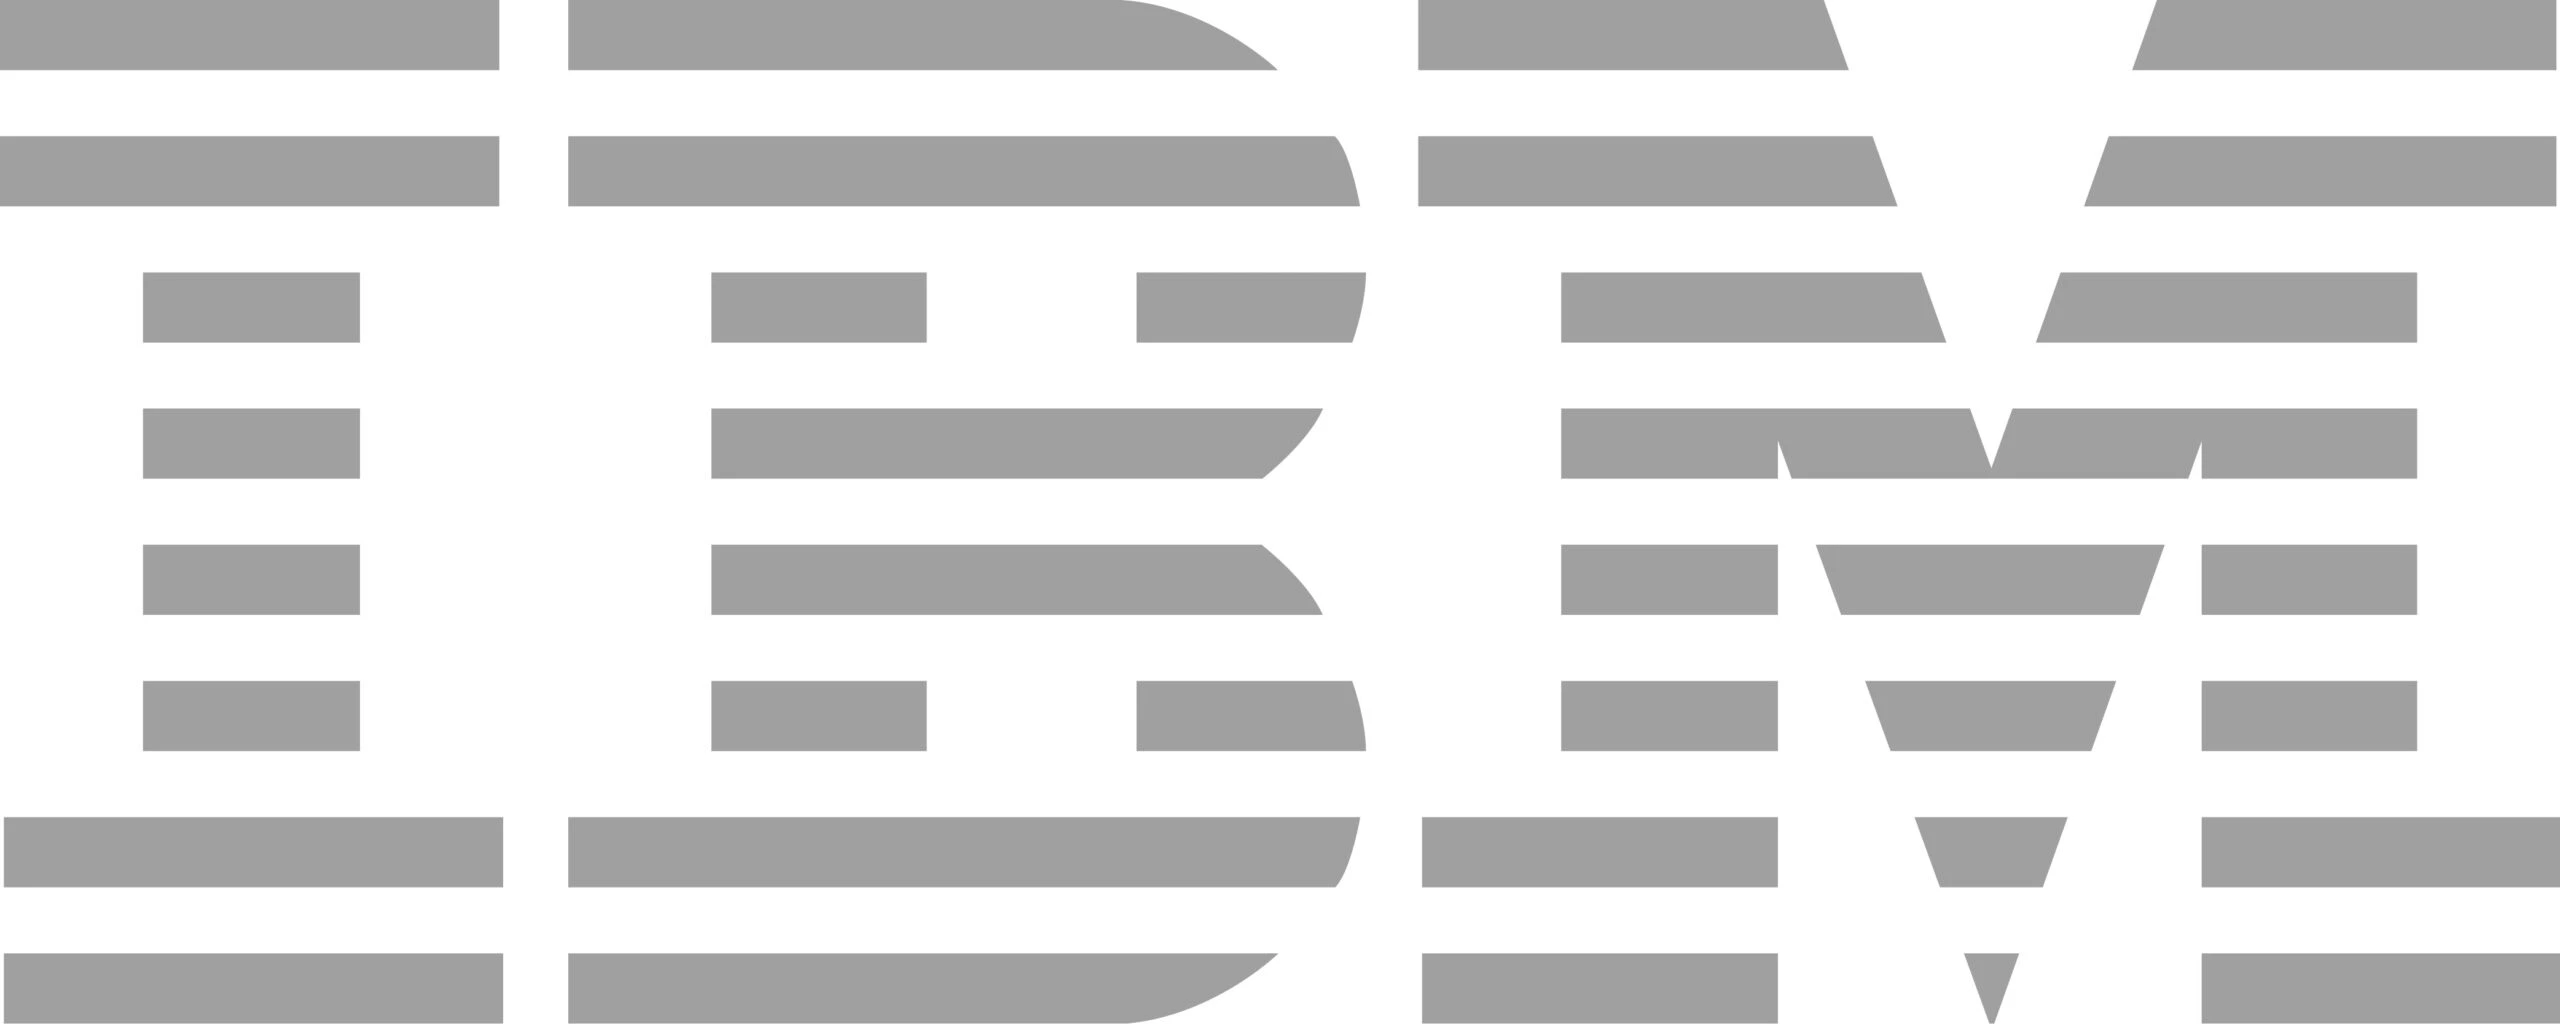 IBM_logo-scaled